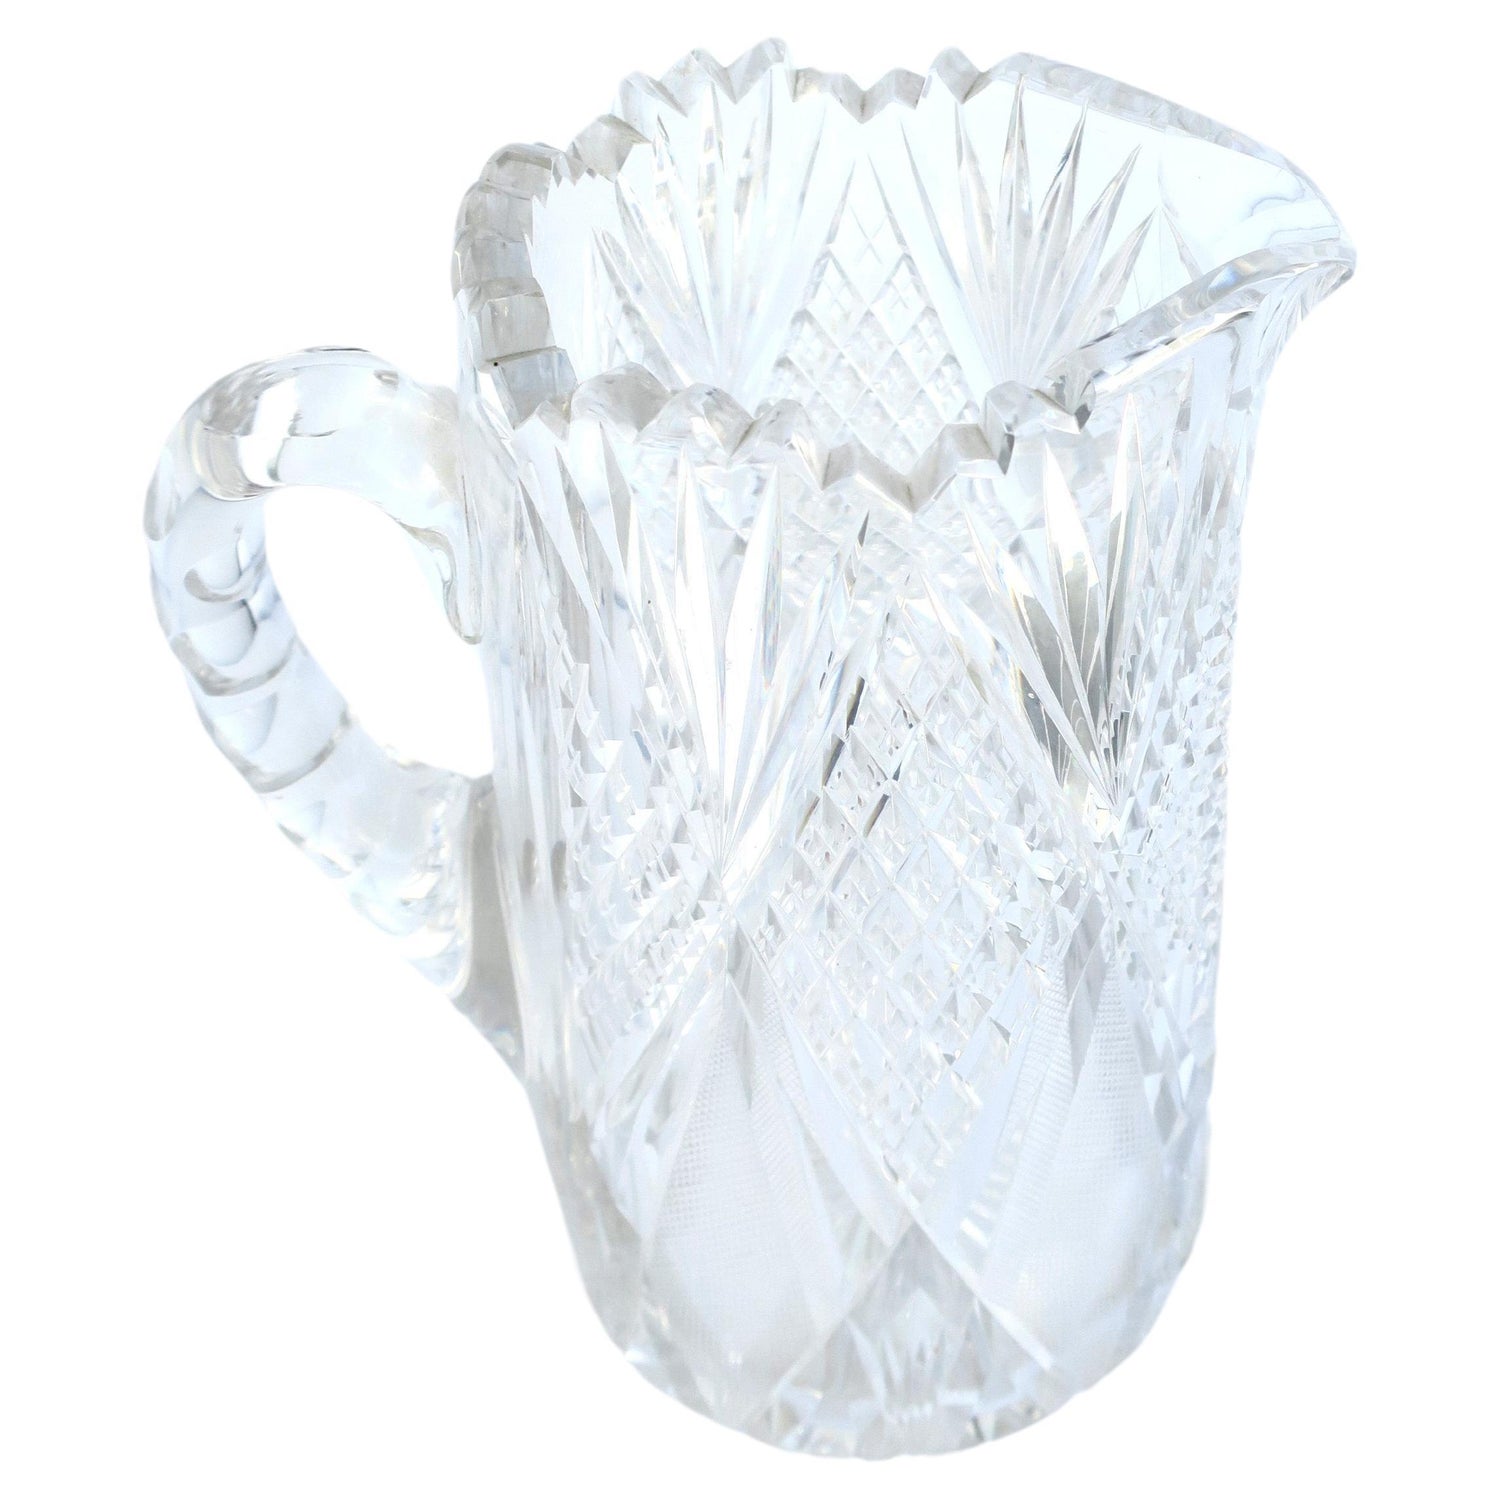 https://a.1stdibscdn.com/american-brilliant-cut-crytal-pitcher-or-vase-for-sale/f_13142/f_368573221698714179508/f_36857322_1698714180468_bg_processed.jpg?width=1500